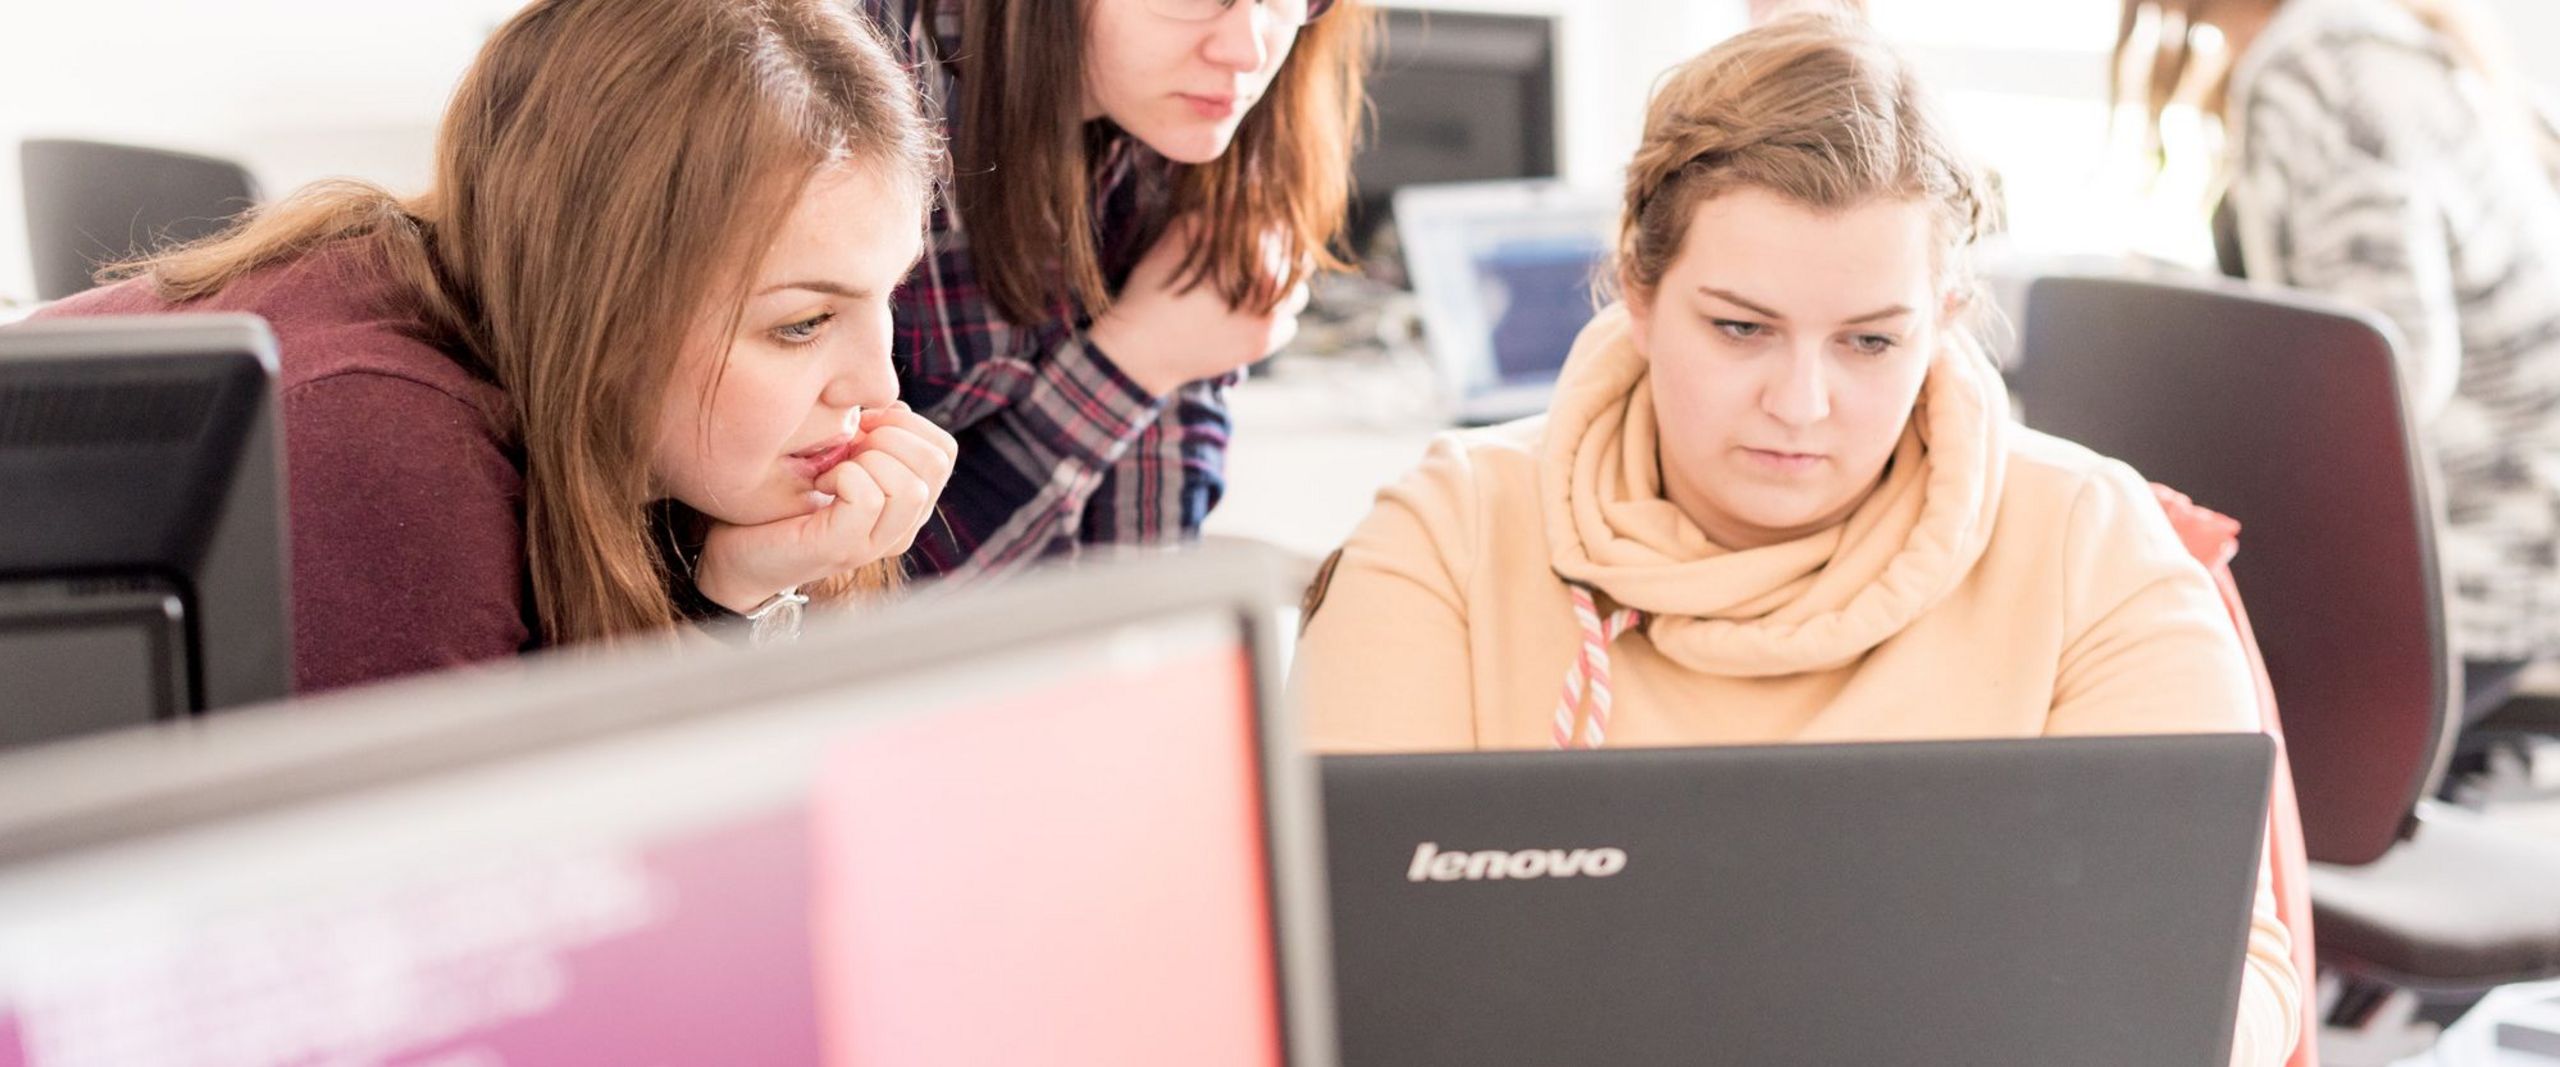 Drei Studentinnen programmieren am Laptop. 